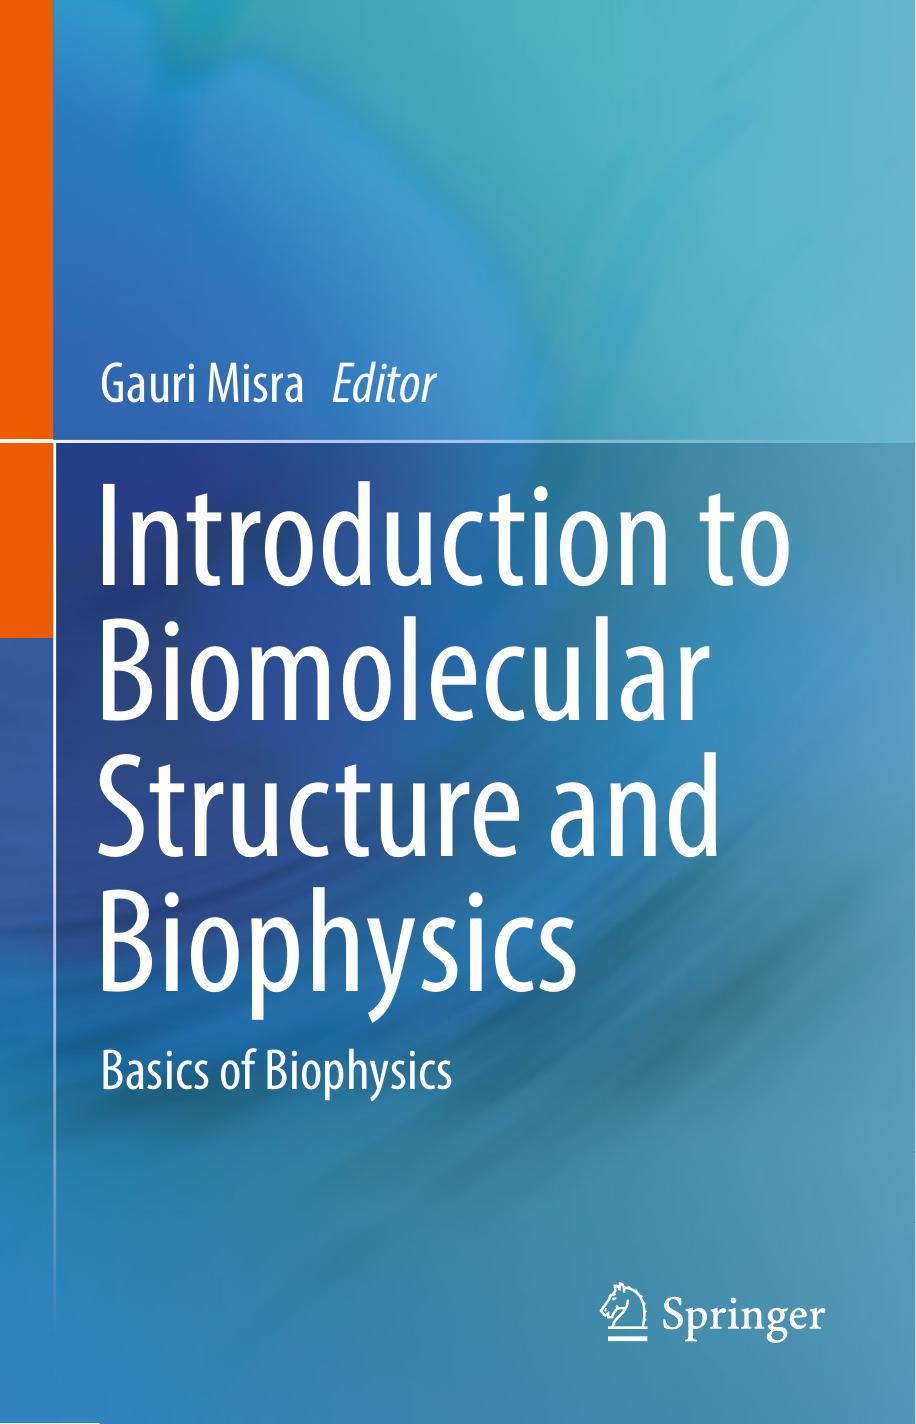 Introduction to biomolecular structure and biophysics basics of biophysics 2017